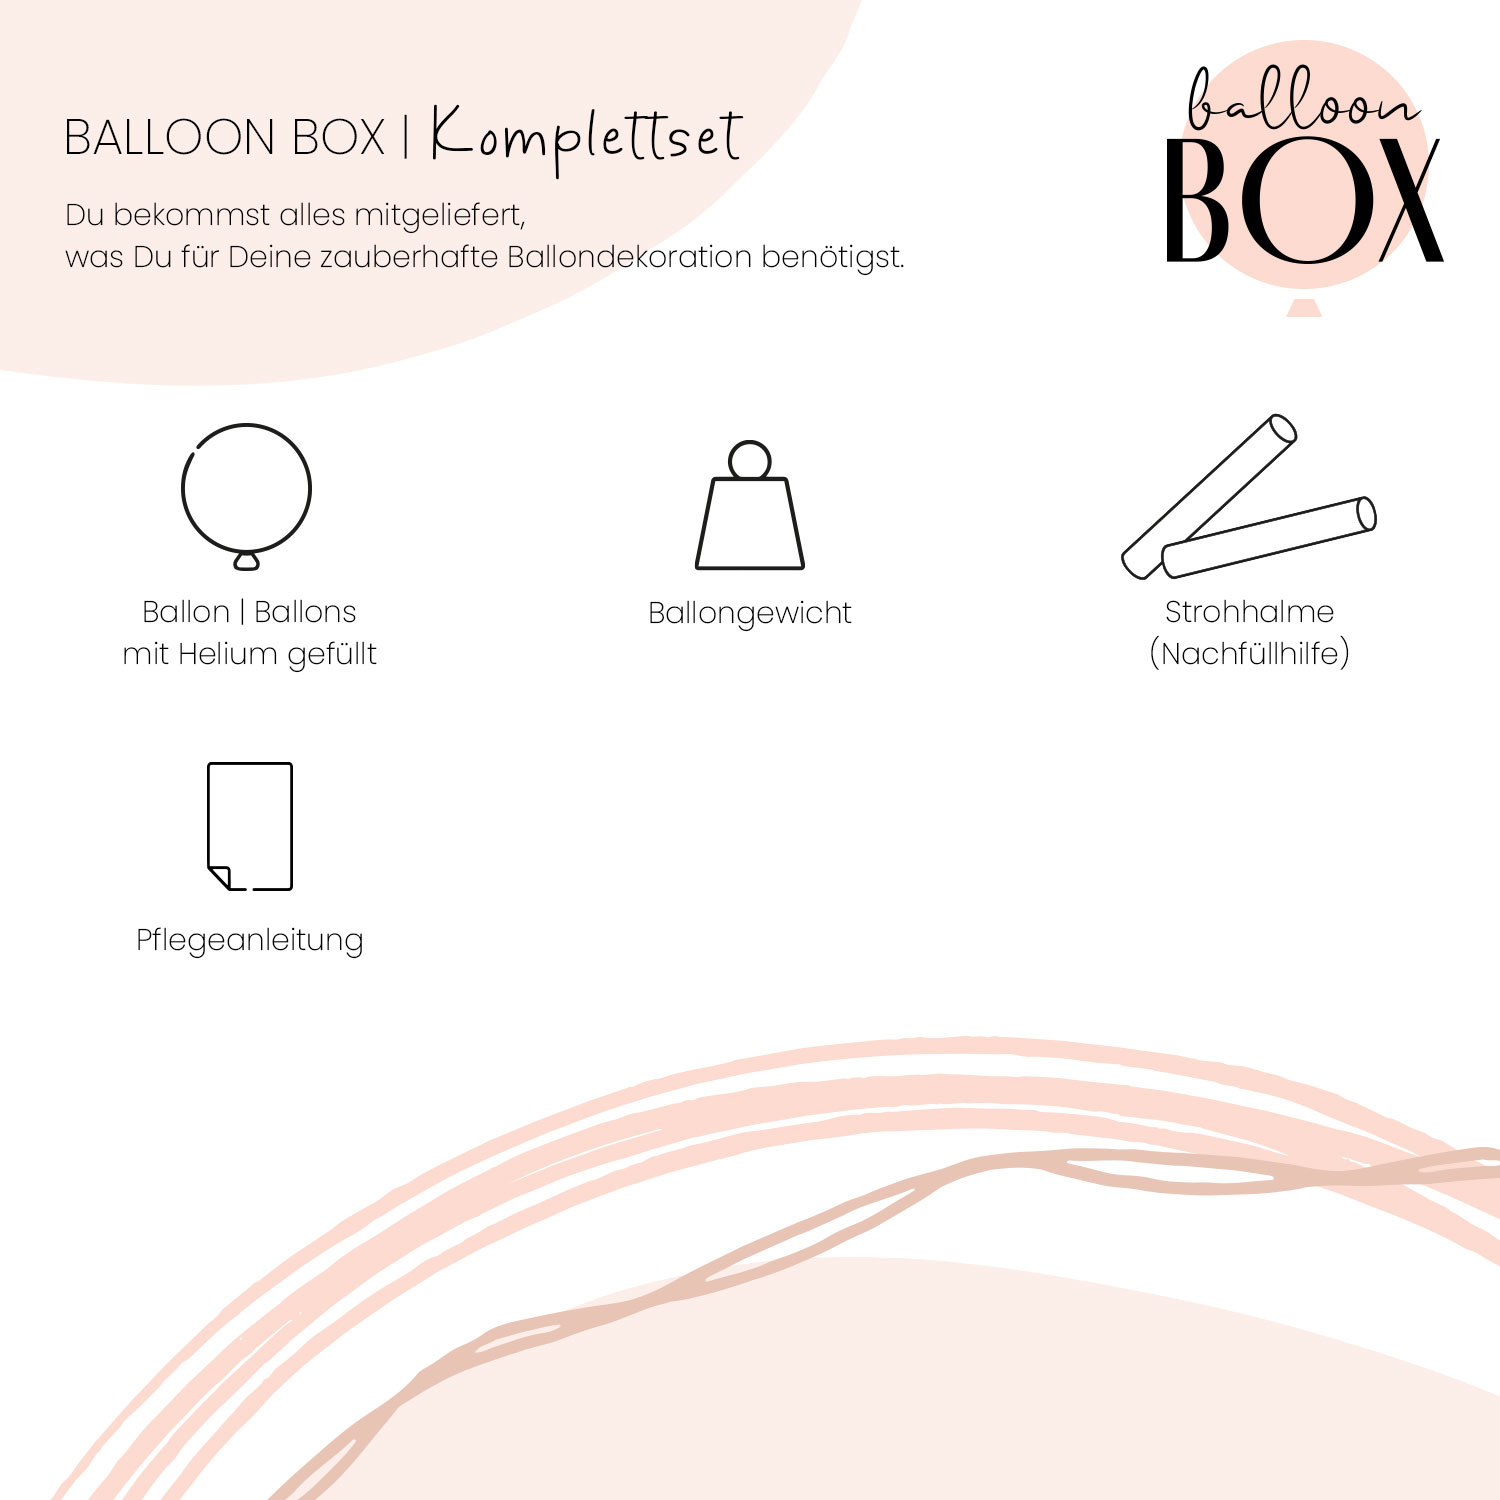 Heliumballon in a Box - Willkommen Zuhause Konfetti